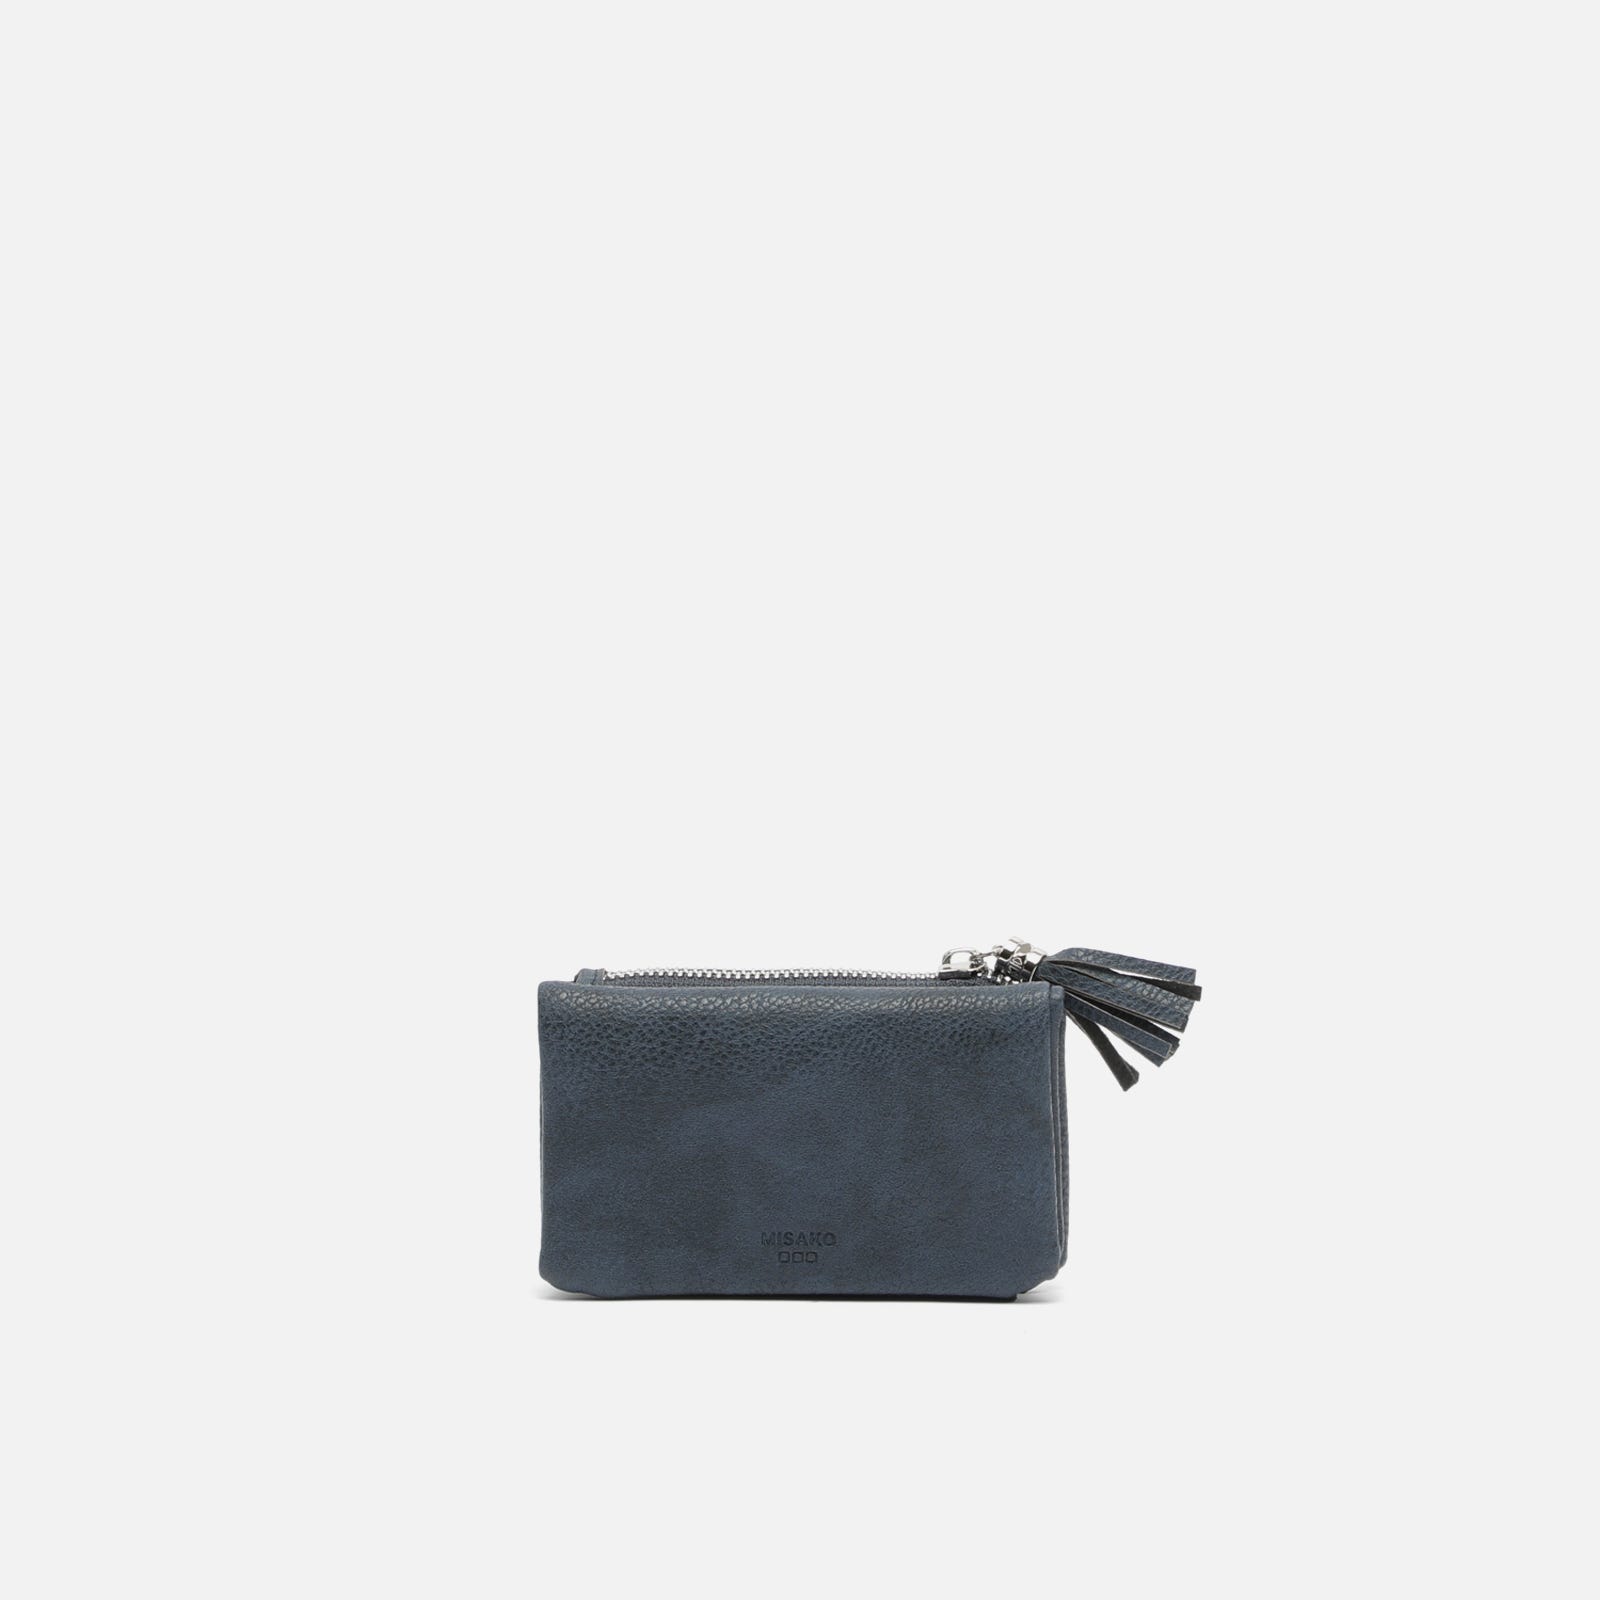 Vera basic small purse